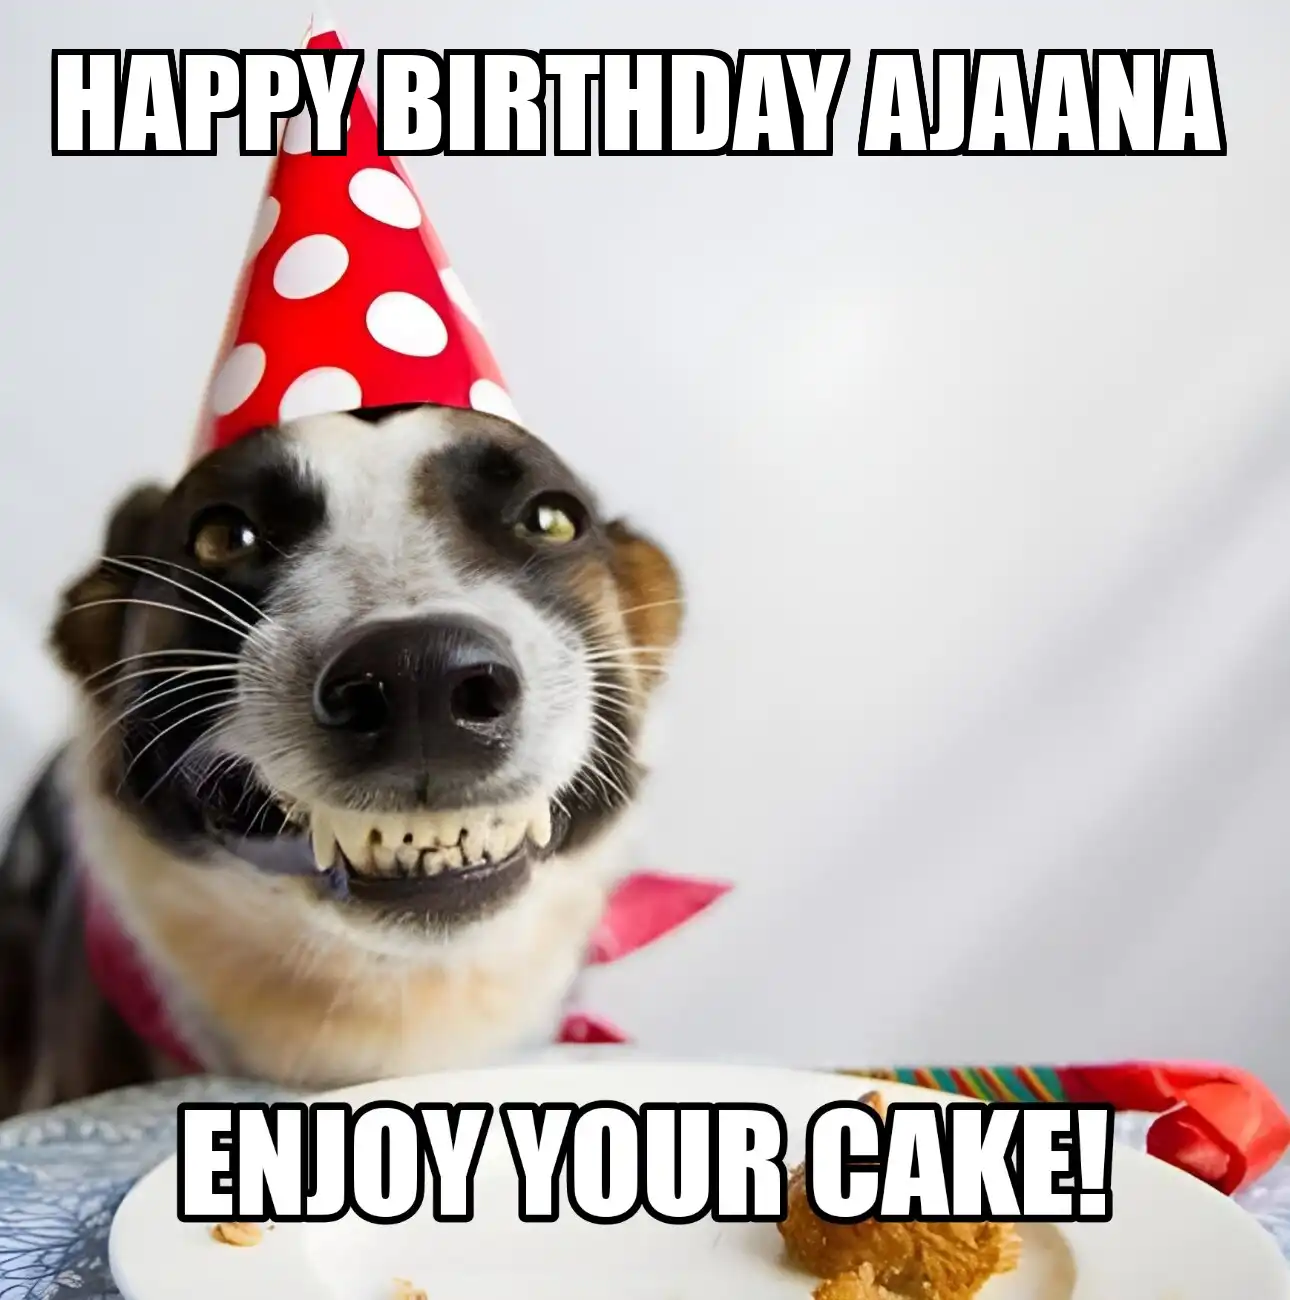 Happy Birthday Ajaana Enjoy Your Cake Dog Meme